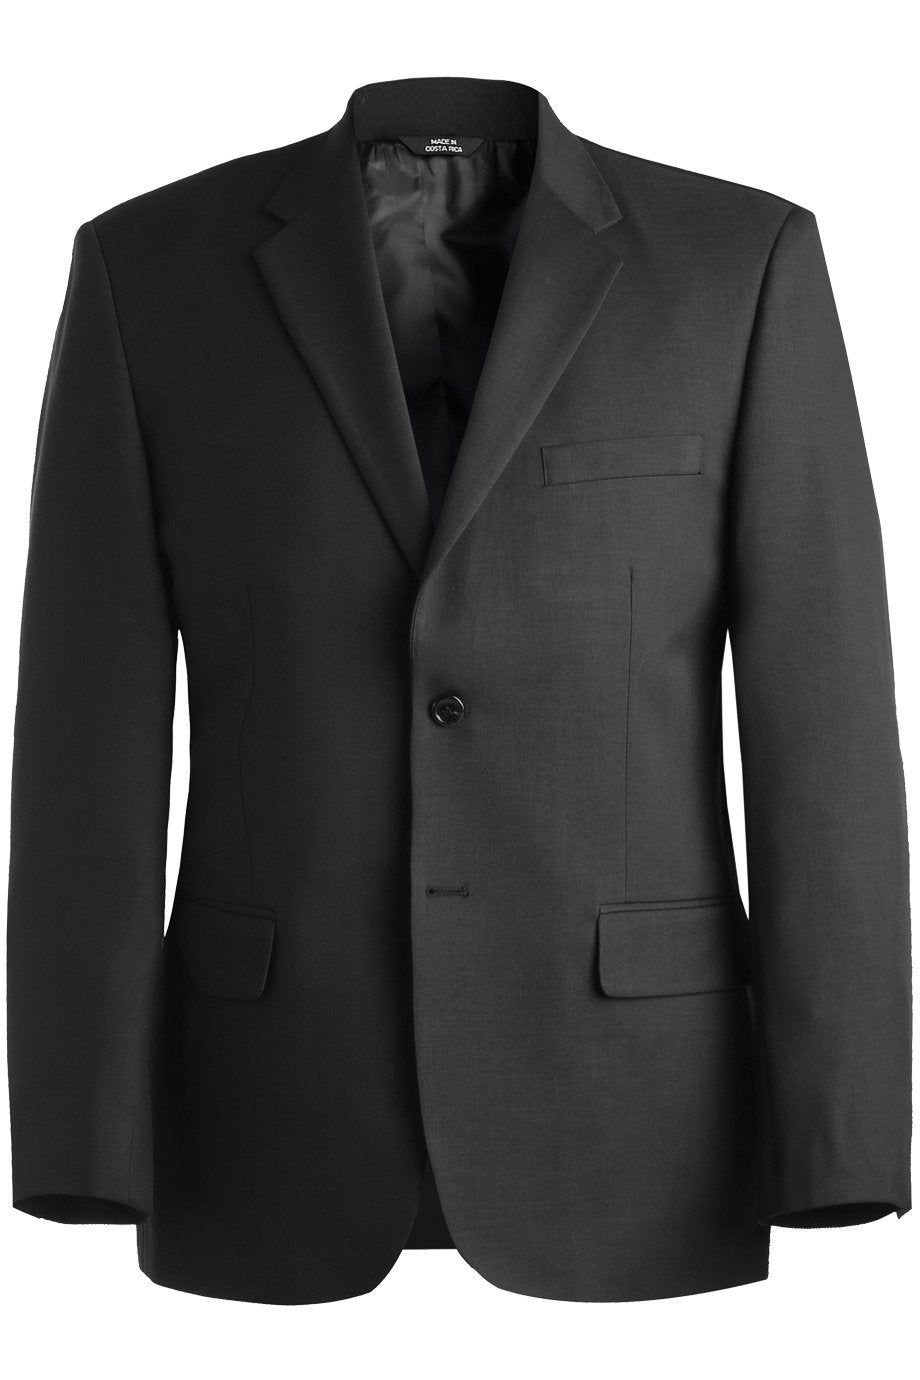 edwards-garment-suit-coats-and-blazers